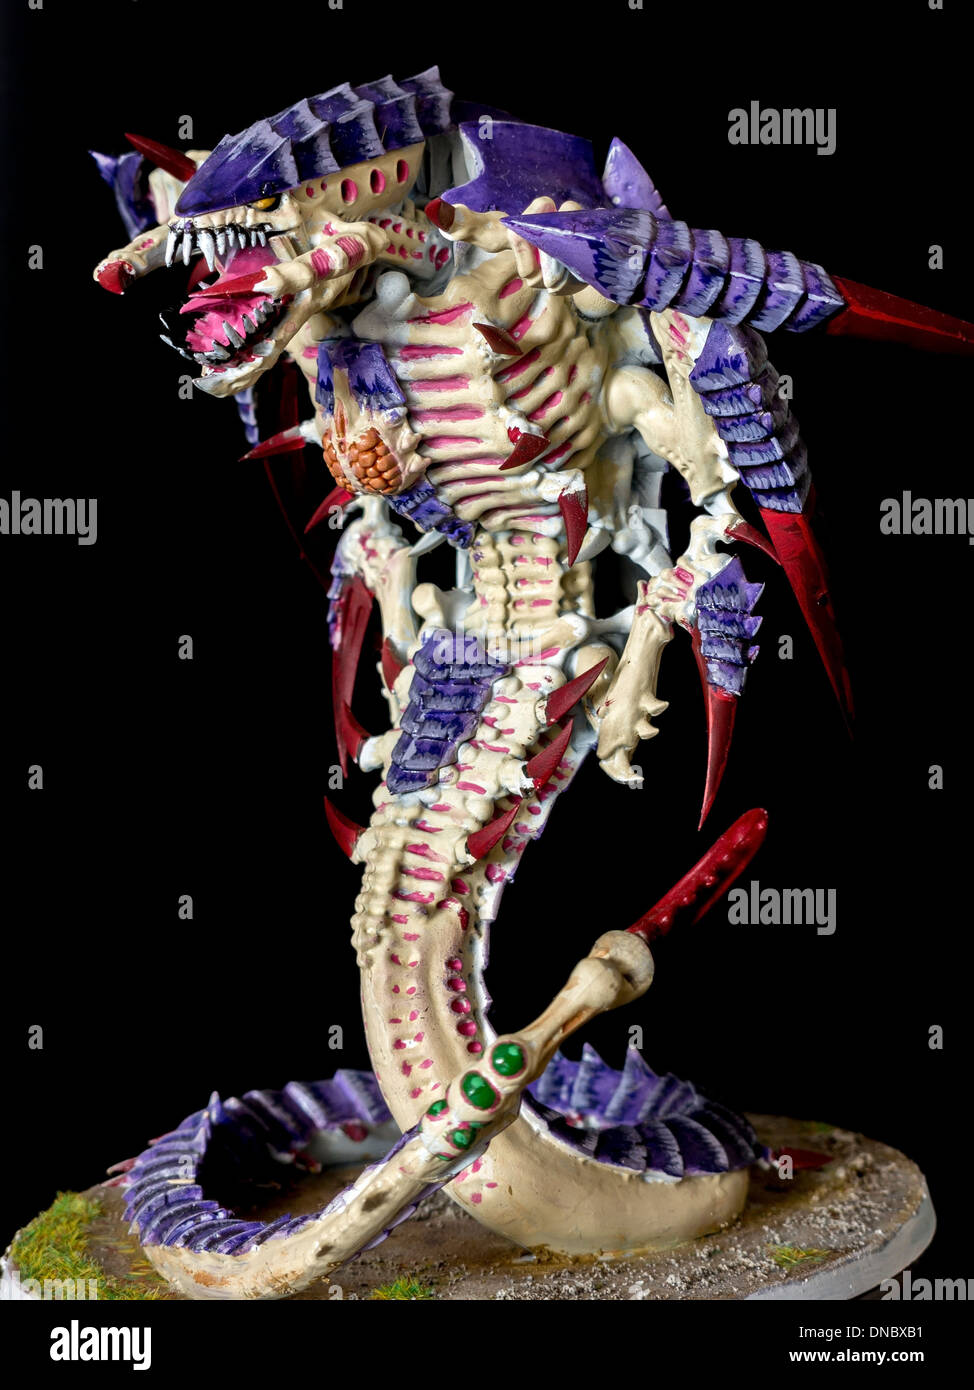 Trygon Tyranid Alien monster creature Games Workshop hand-painted Warhammer 40,000 model Stock Photo